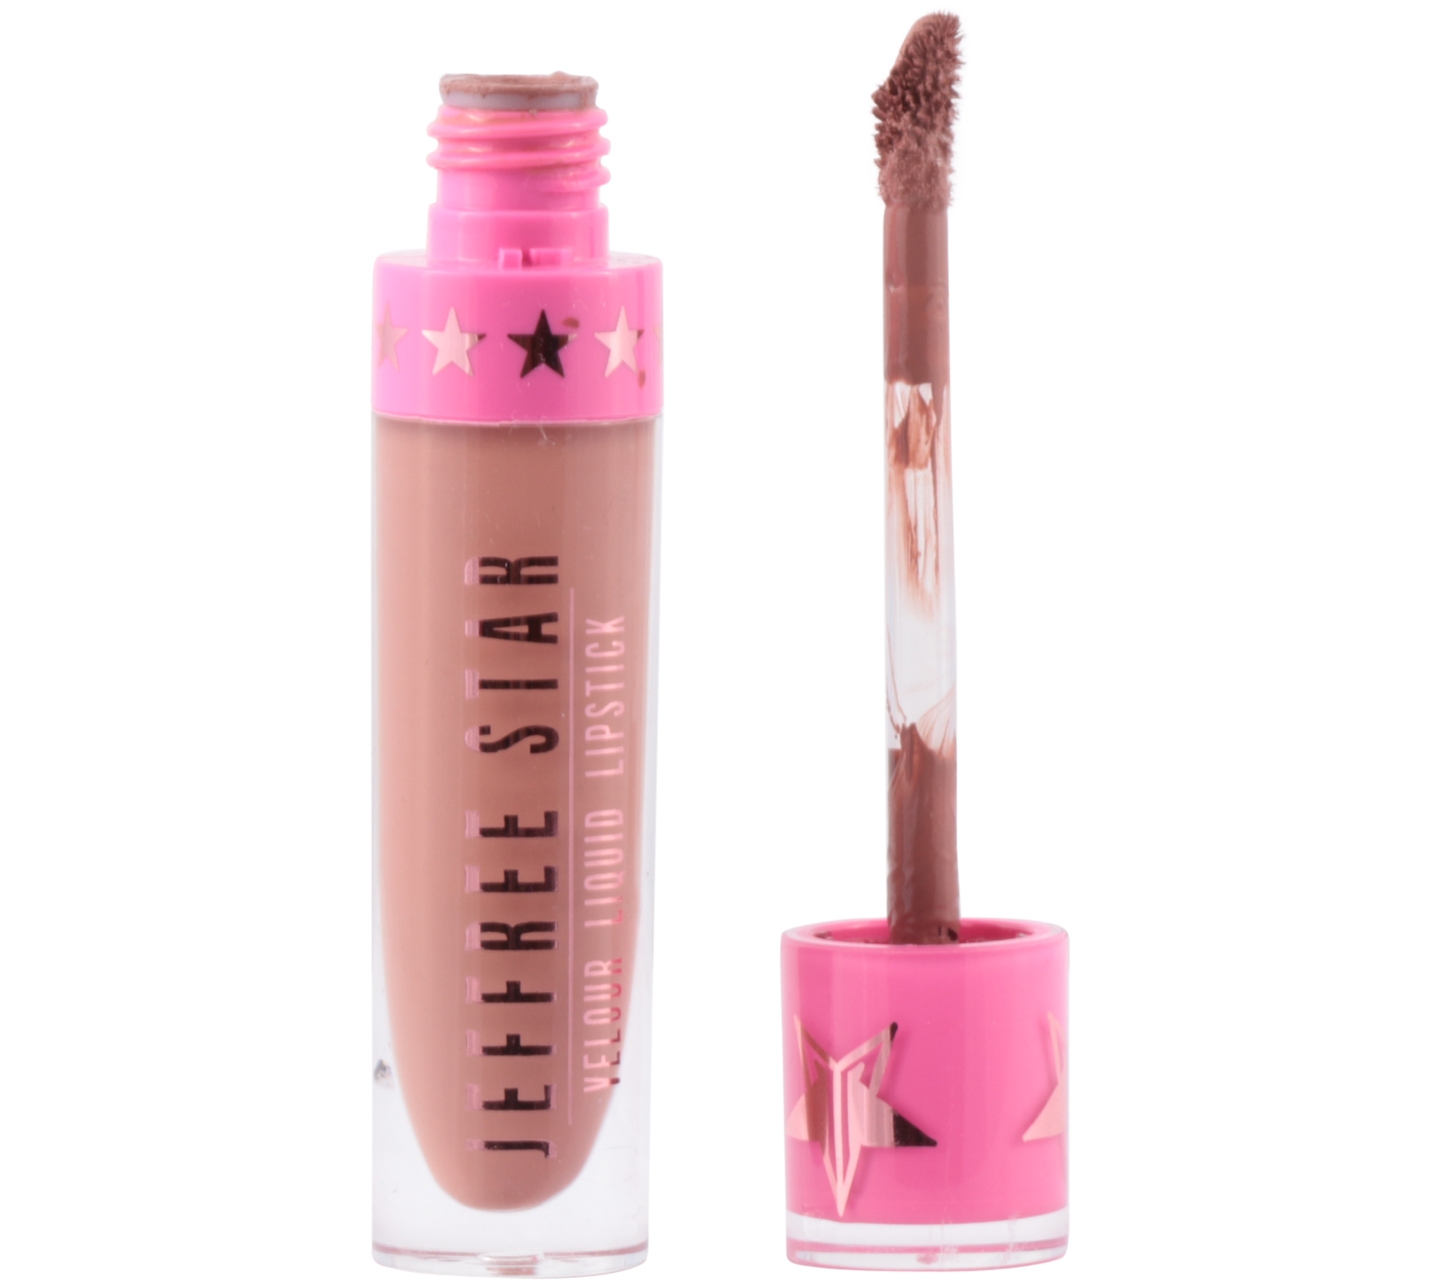 Jeffree Star Celebrity Skin Velour Liquid Lipstick Lips